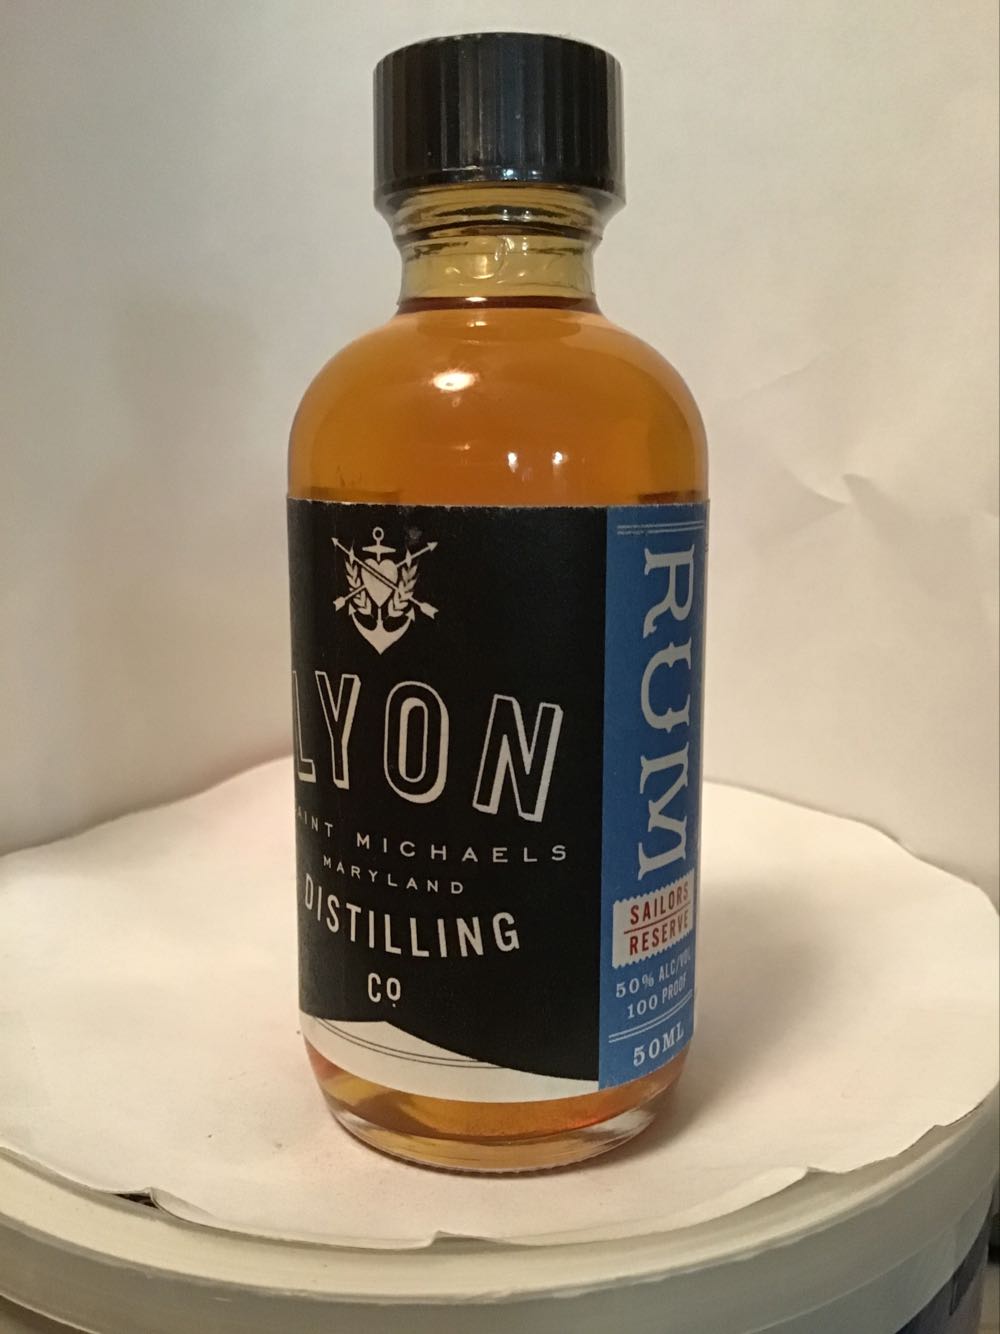 Lyon Sailors Reserve - Lyon Distilling Co. (50 mL) alcohol collectible - Main Image 1